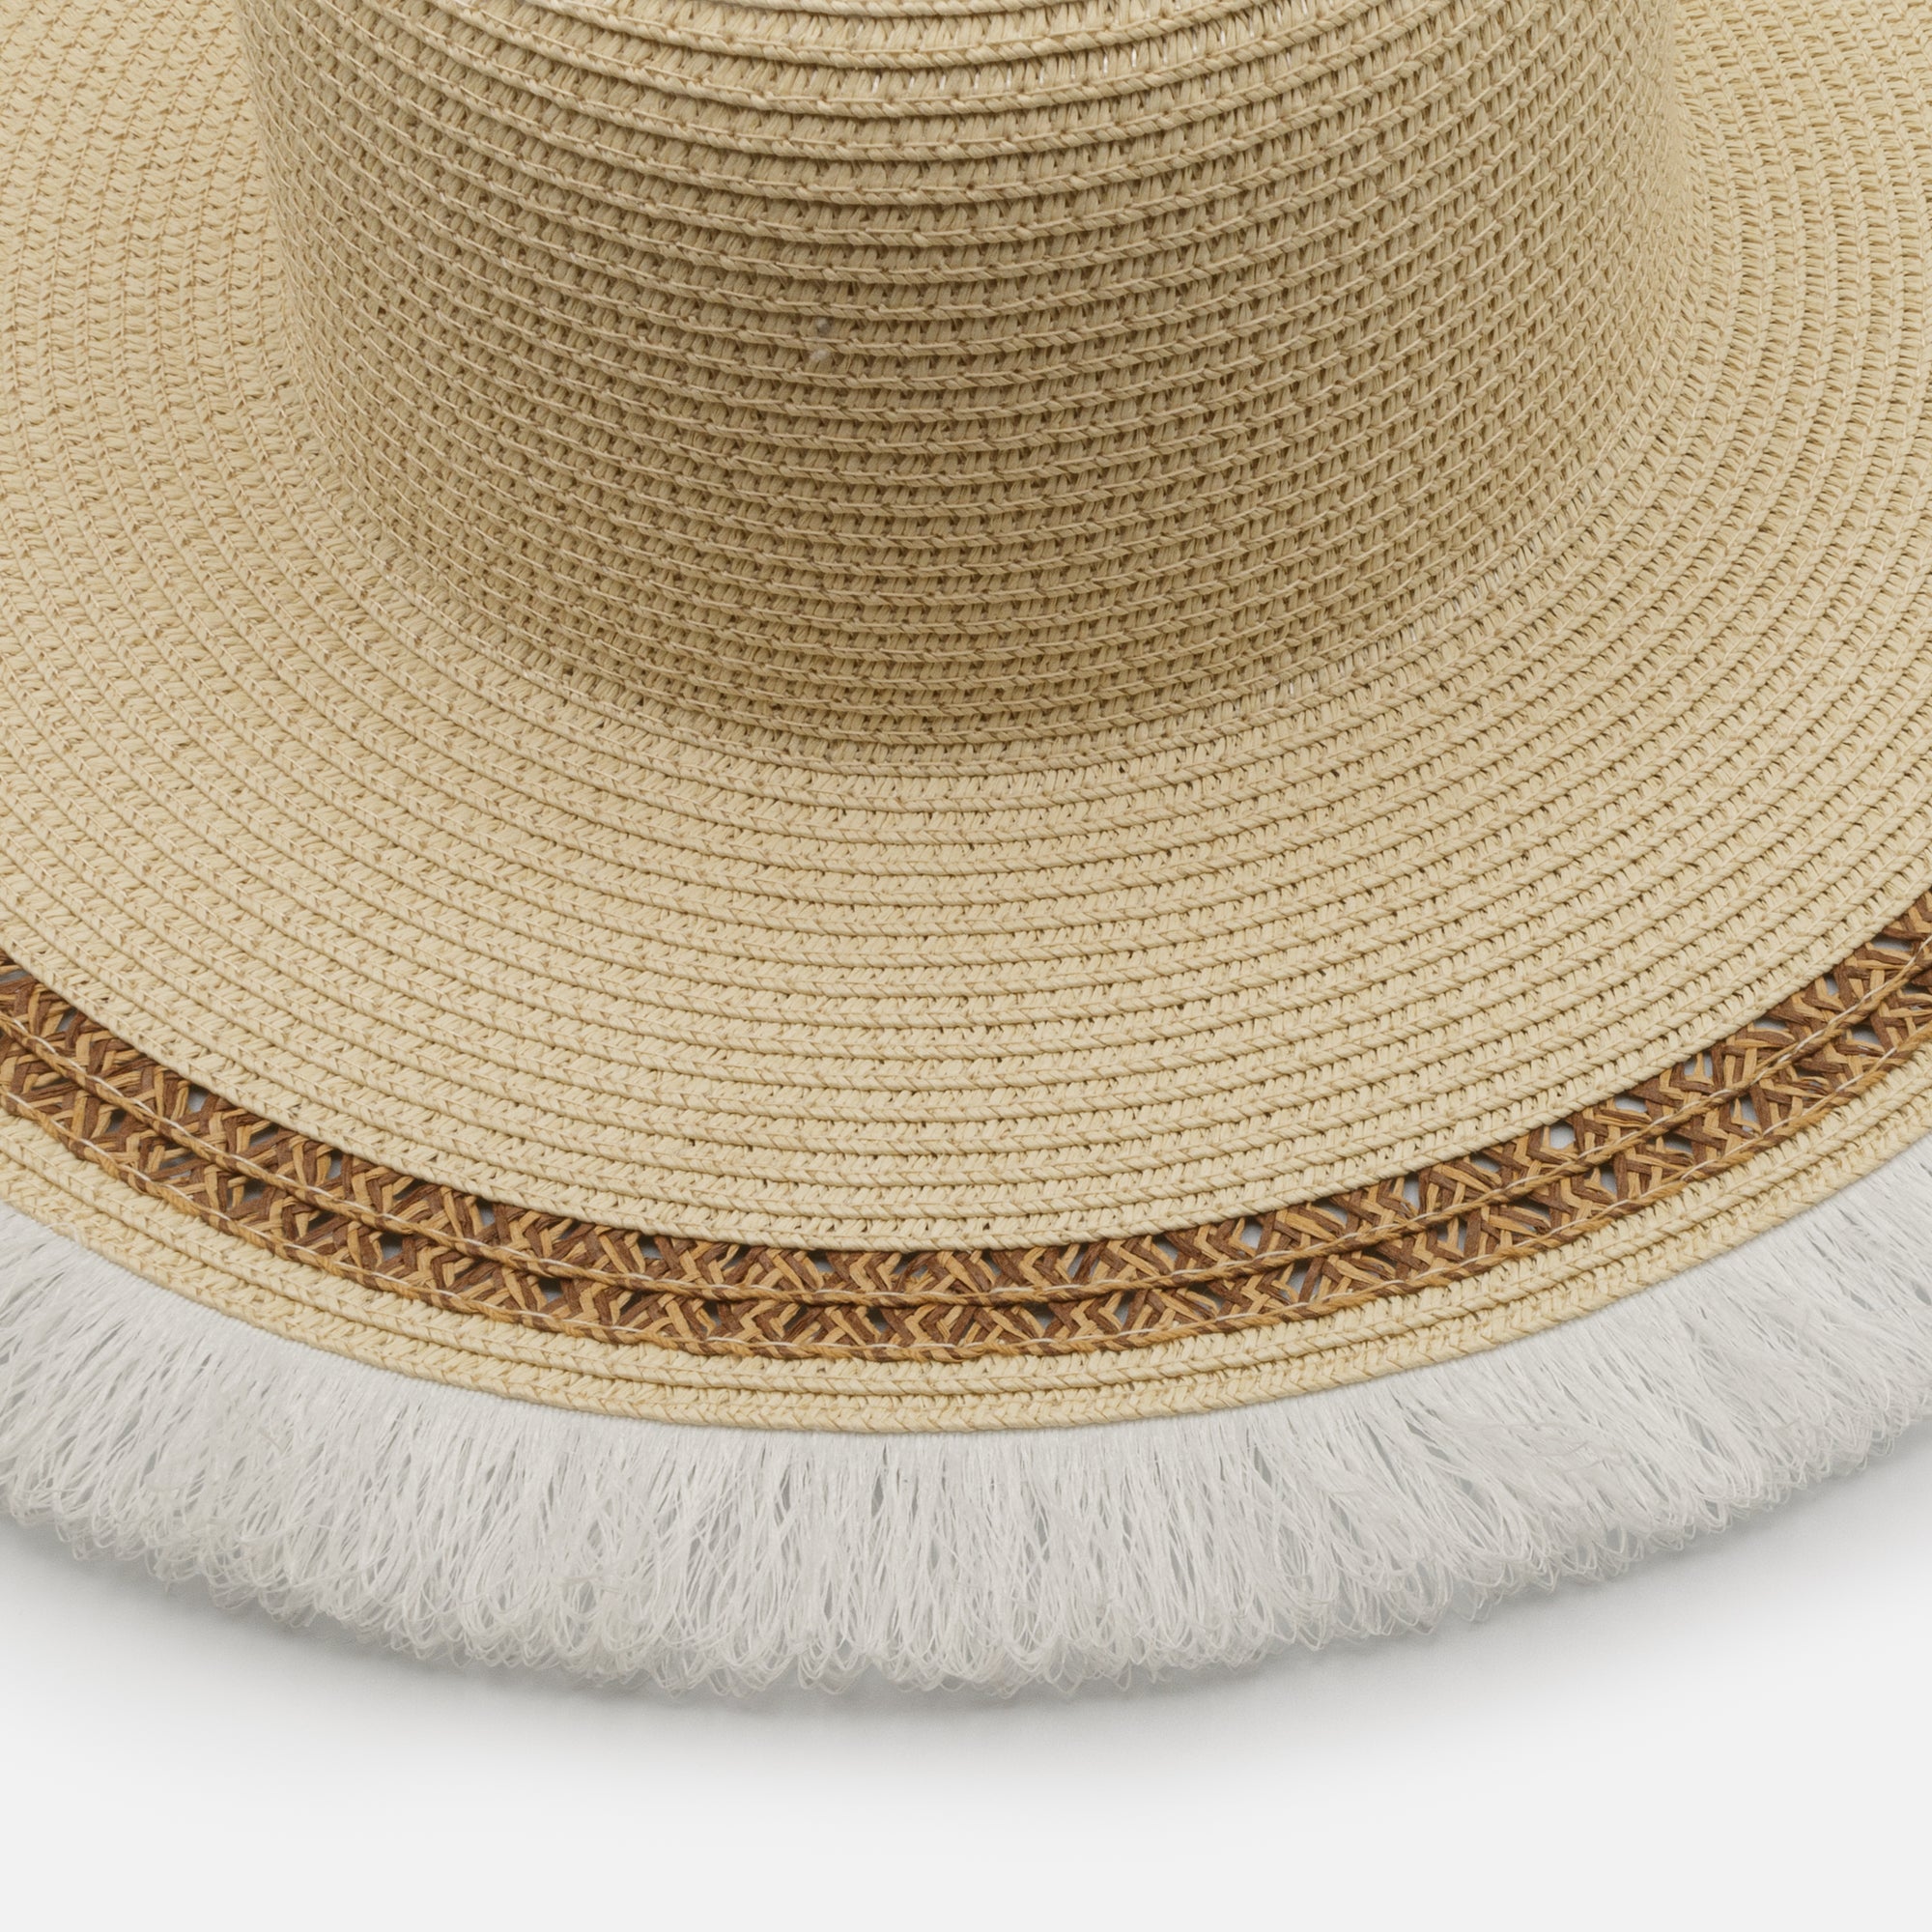 Straw hat with white fringe